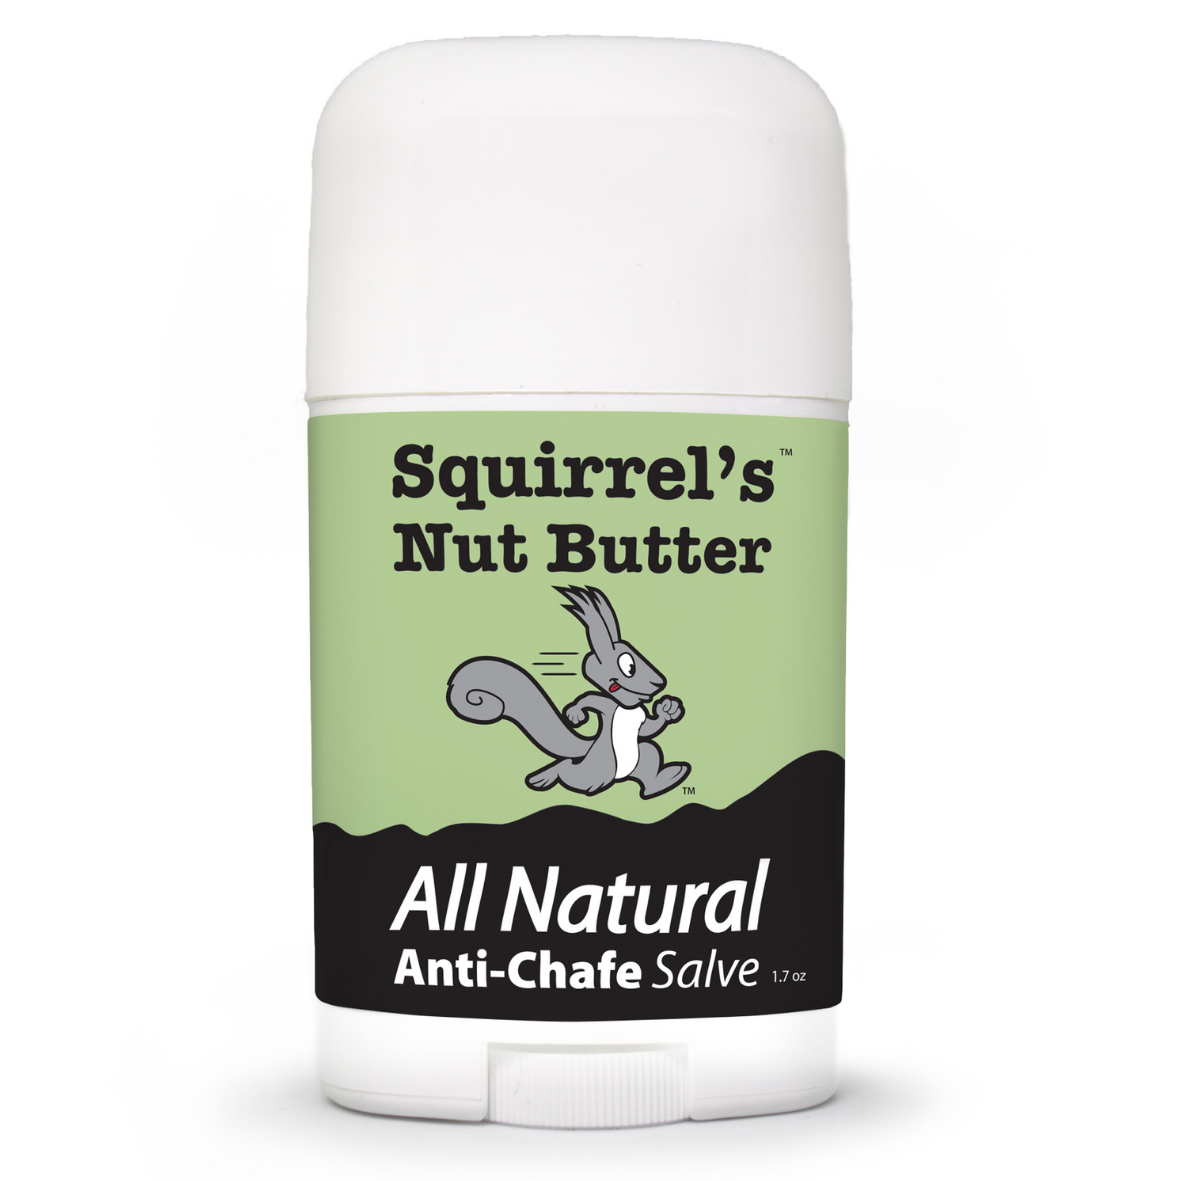 Squirrel's Nut Butter anti-chafe salve